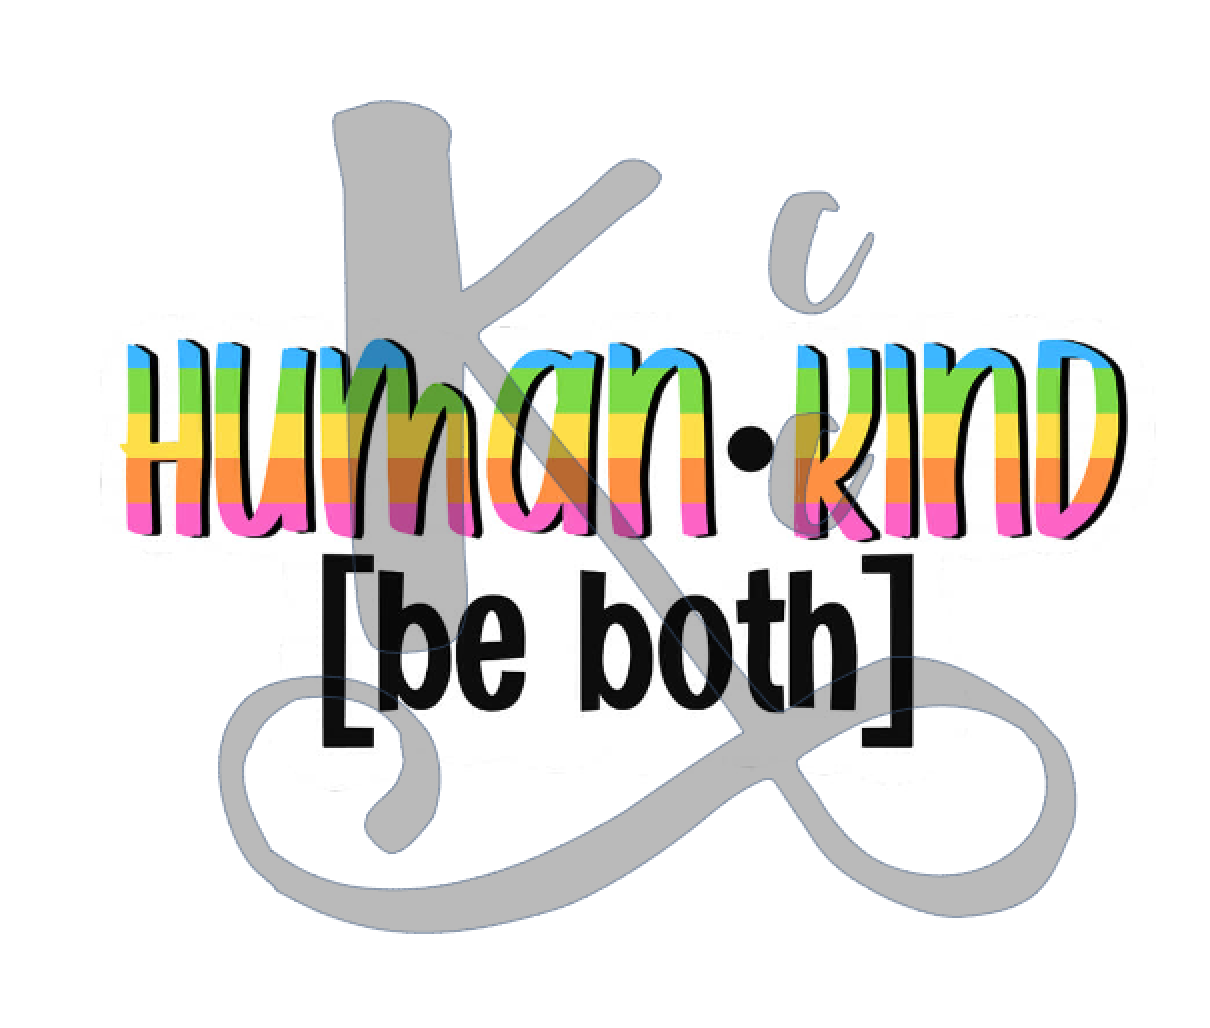 Human Kind